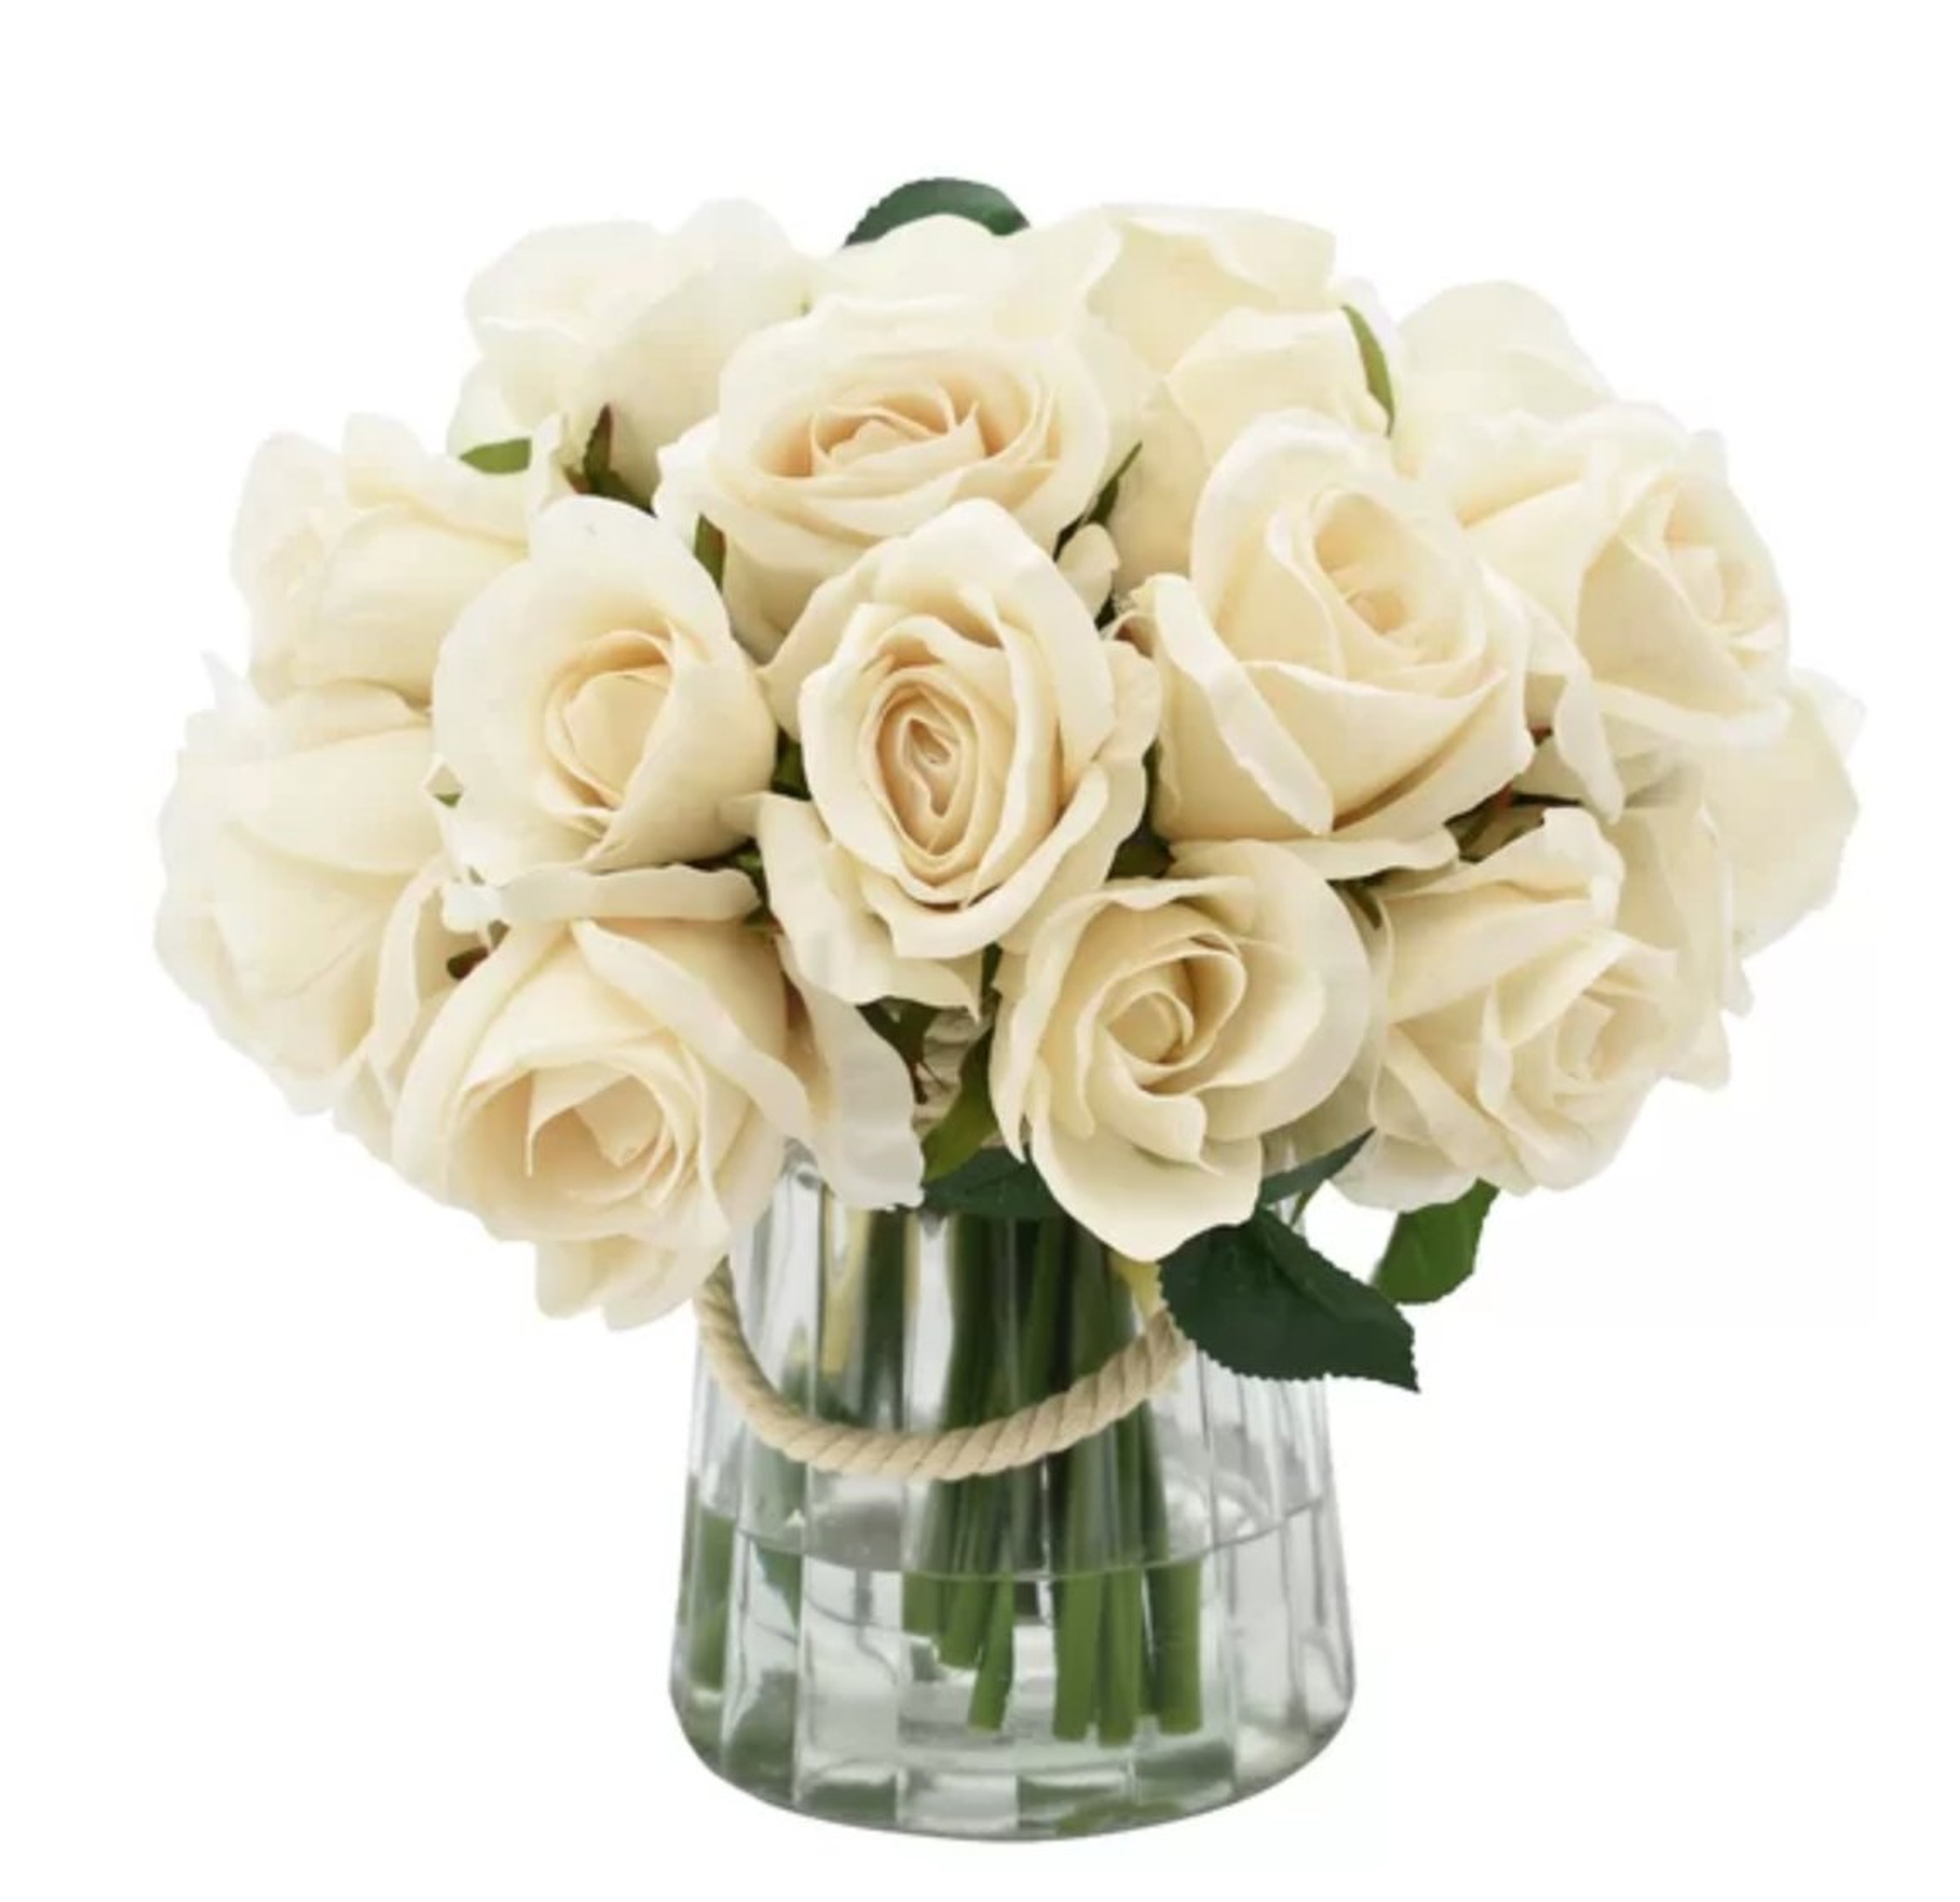 Cream Rose Centerpiece in Vase - Wayfair